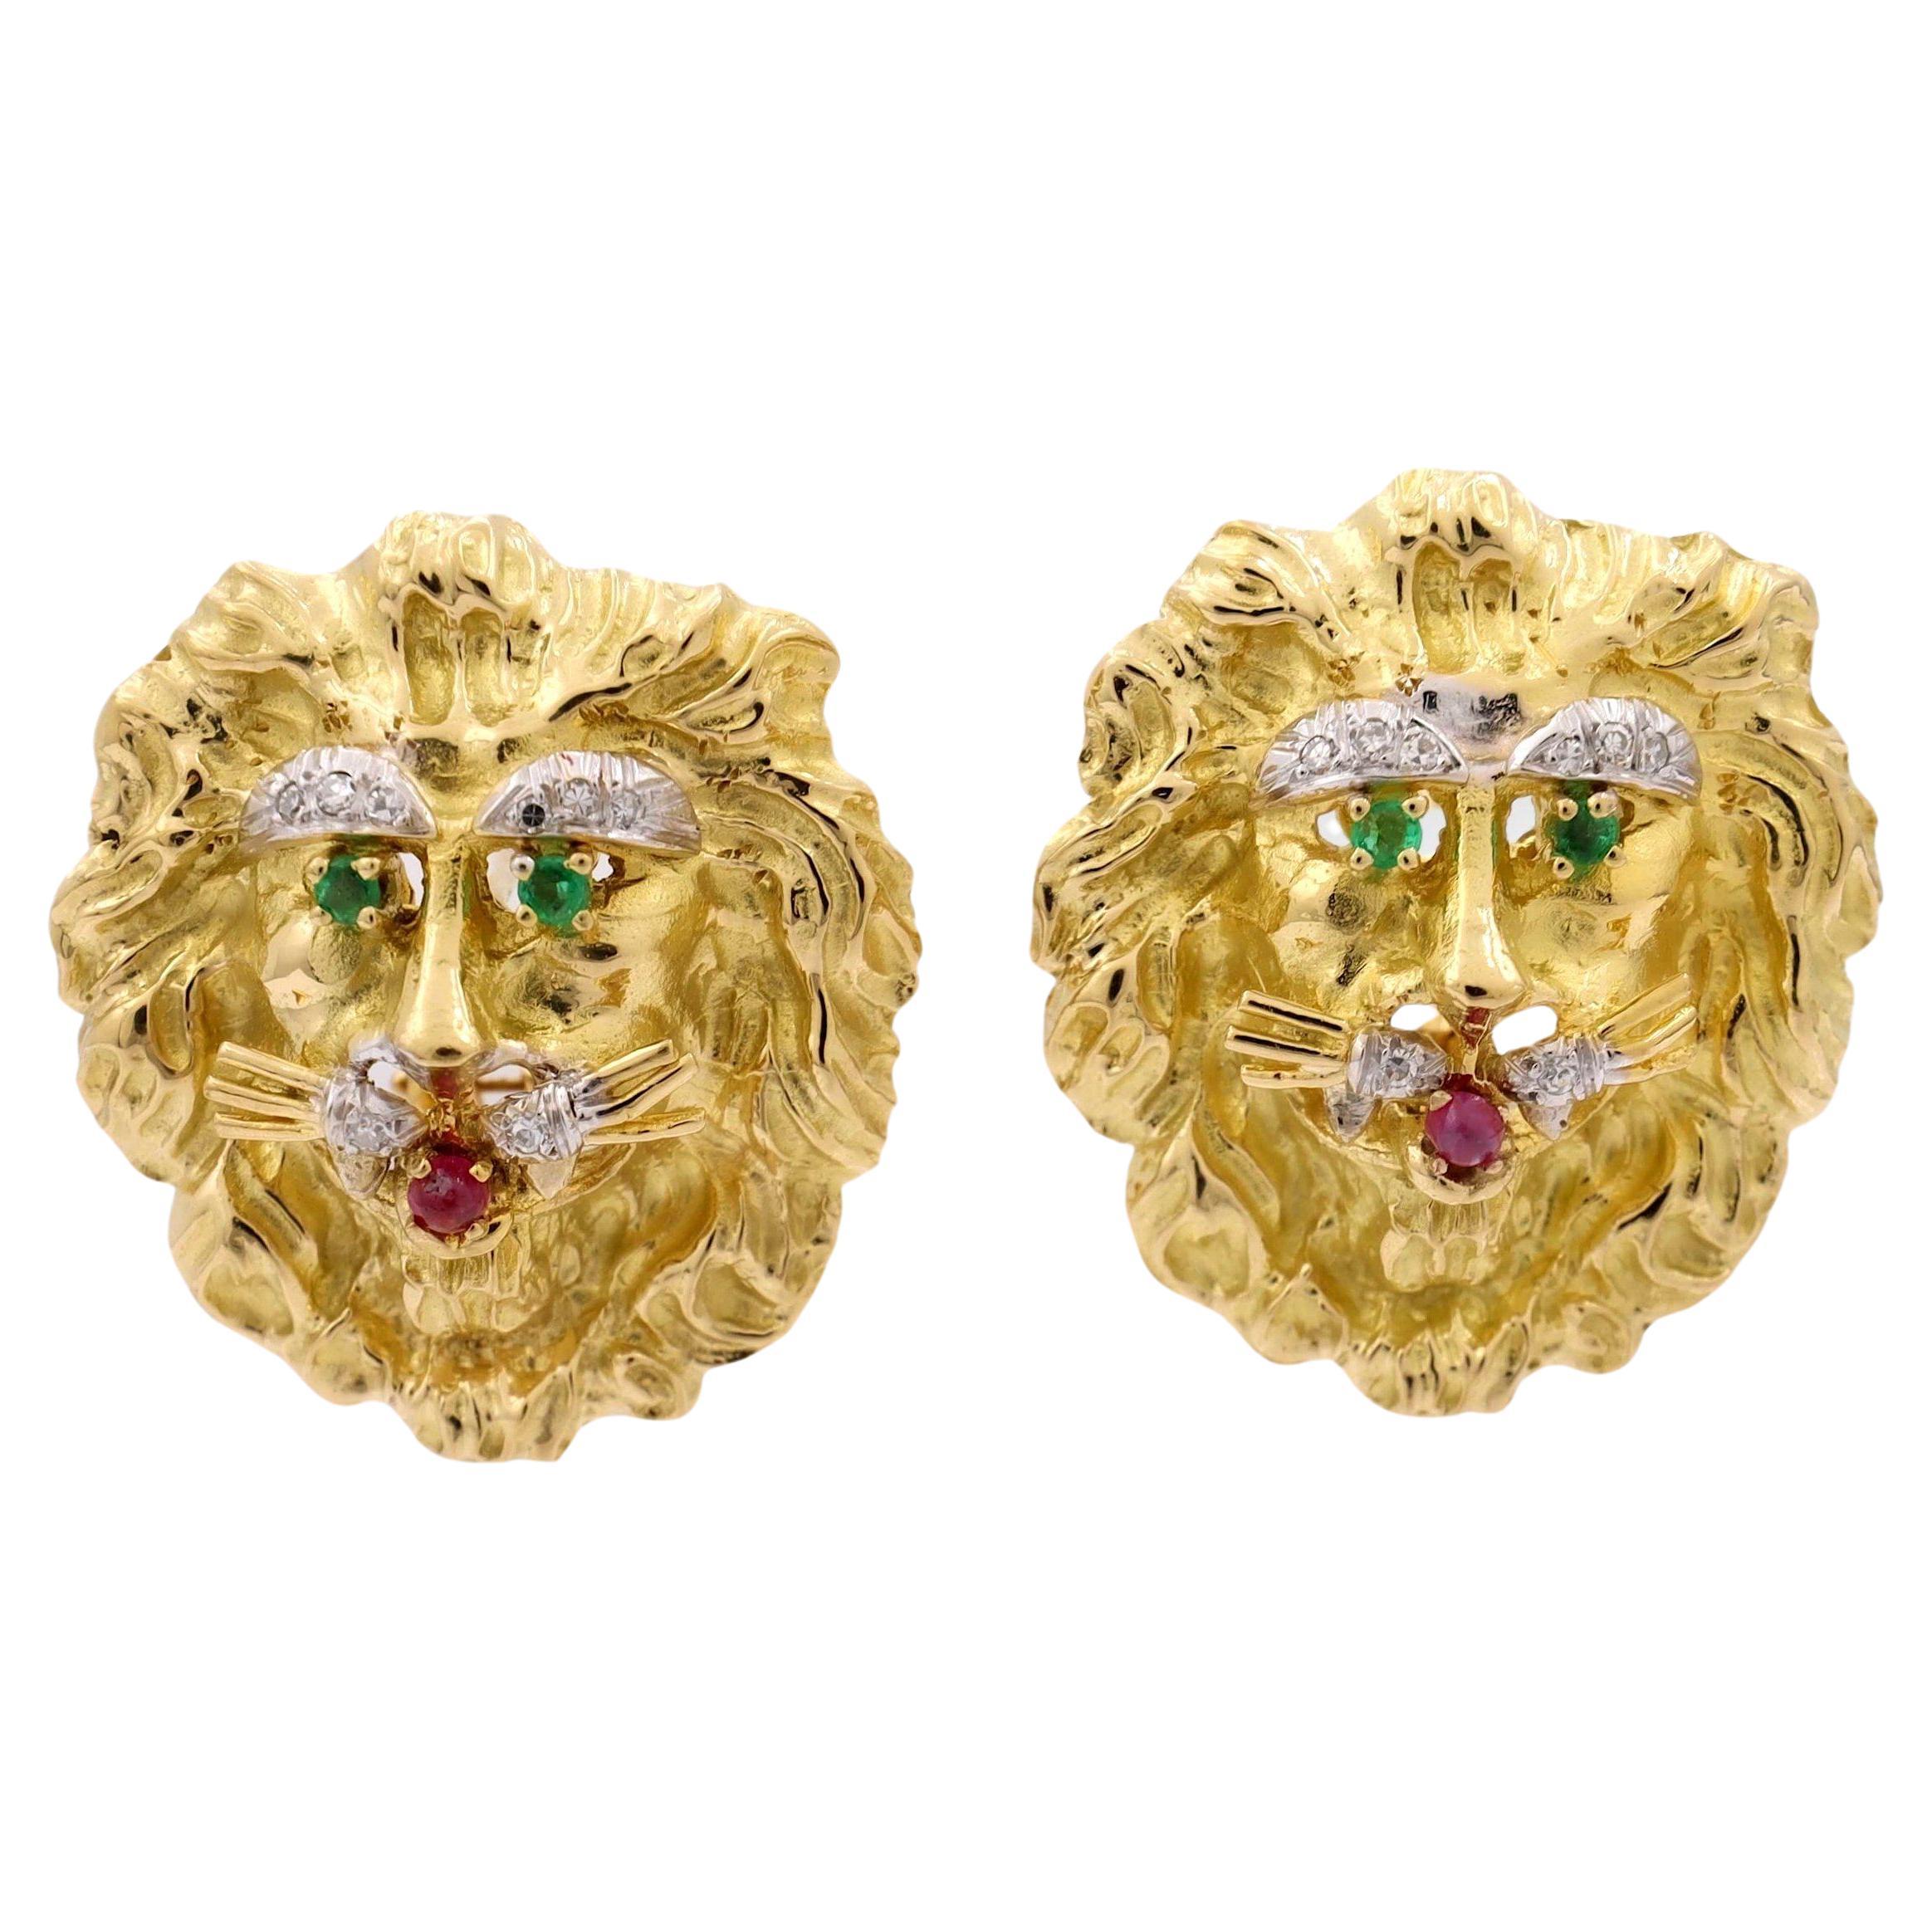 Hammerman Brothers 18K Yellow Diamond Ruby Emerald Gold Lion Earrings